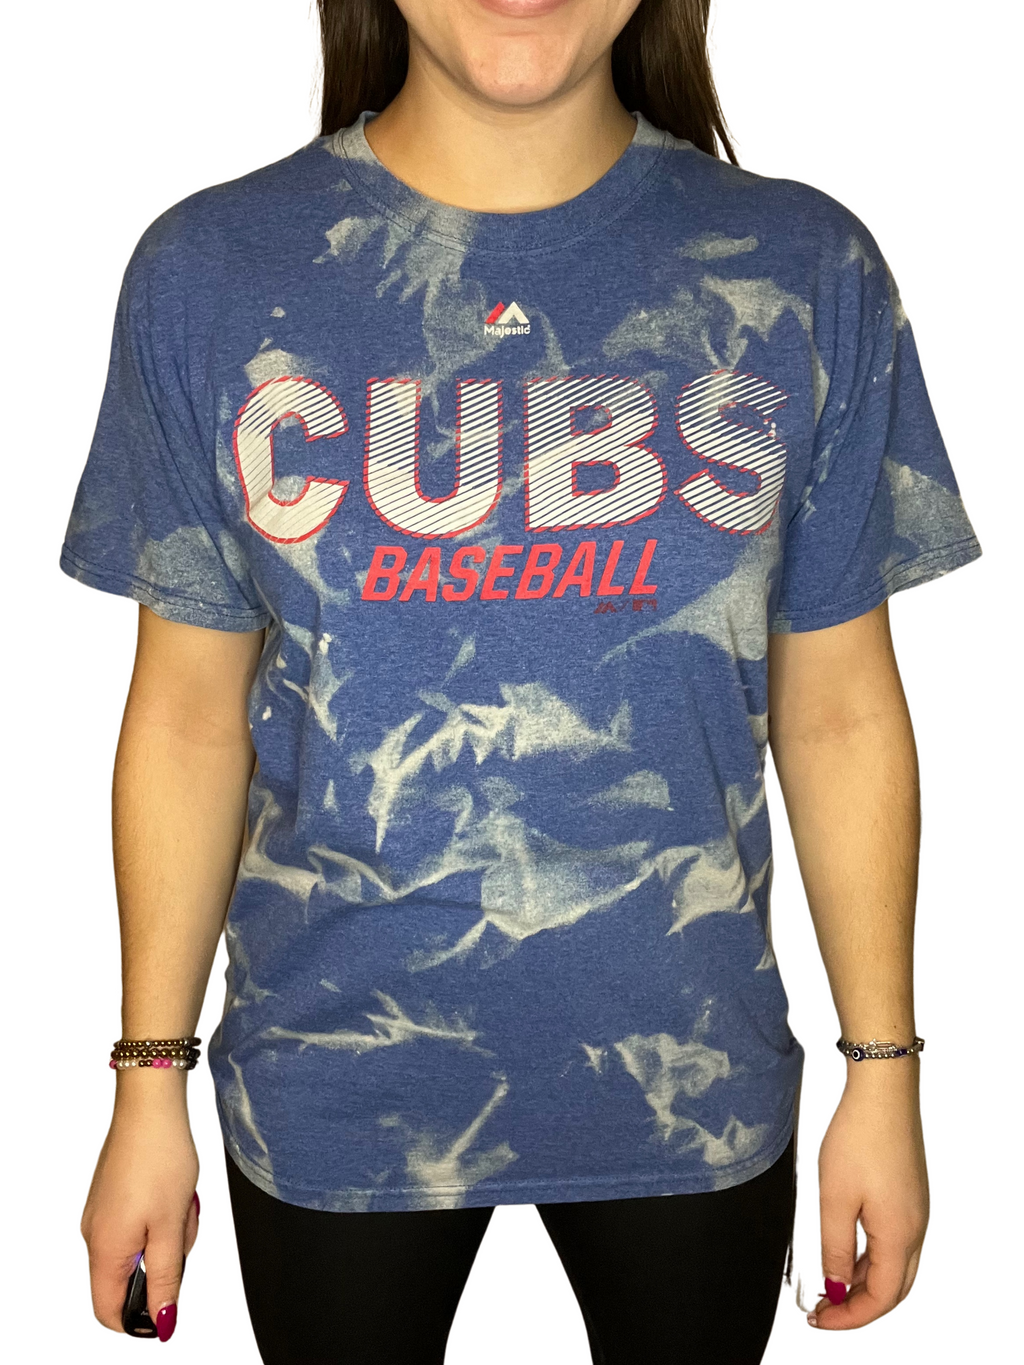 Chicago Cubs Flannel Shirt – Kampus Kustoms